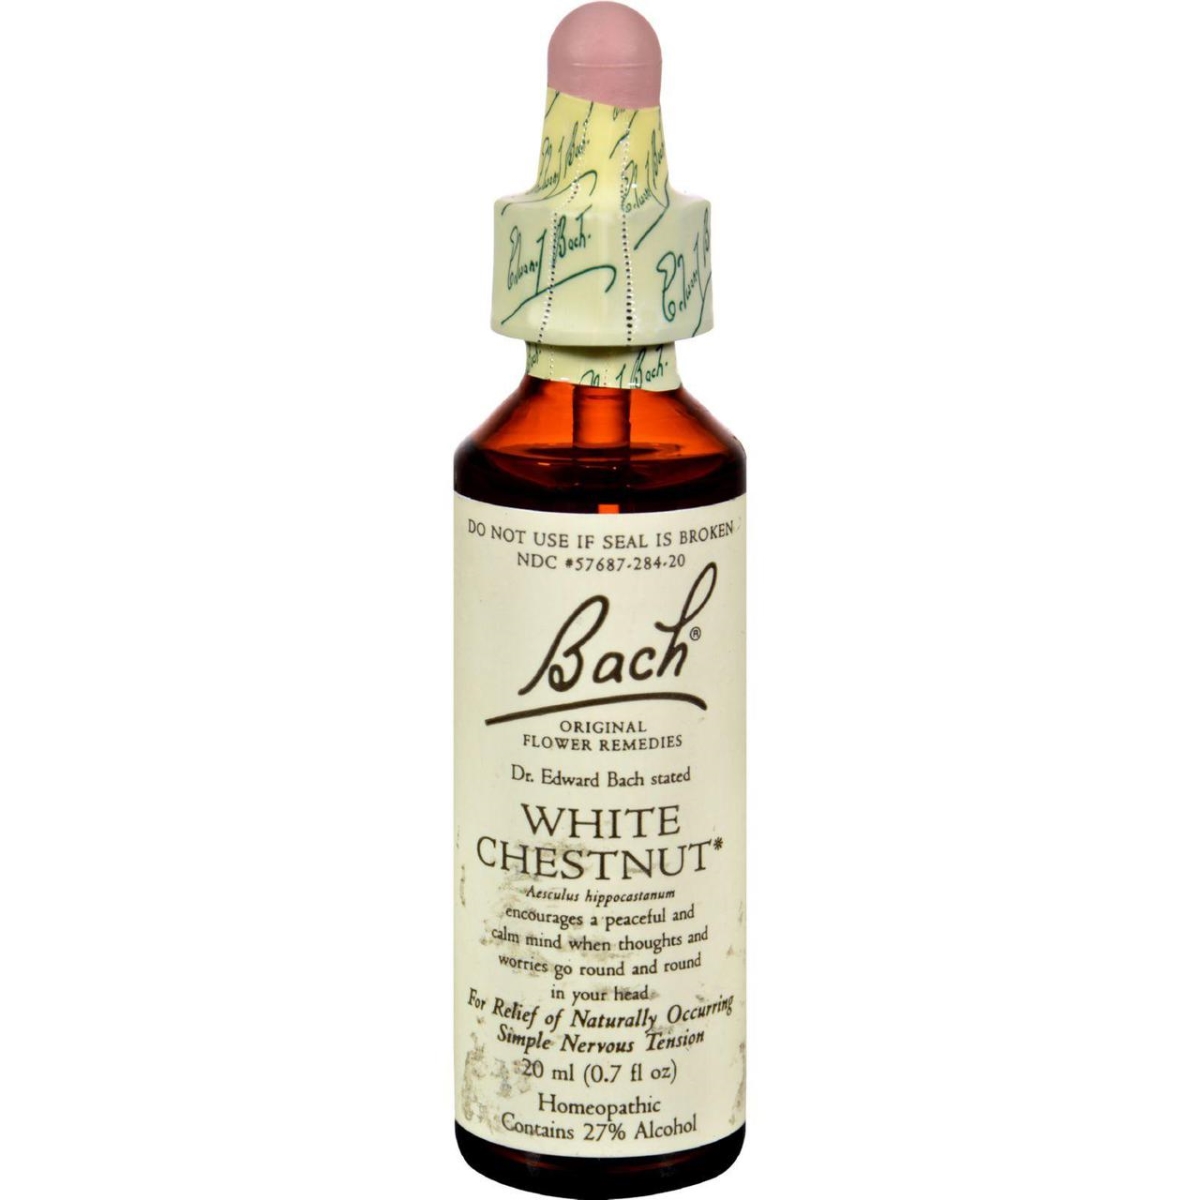 Hg0234054 0.7 Fl Oz Flower Remedies Essence - White Chestnut